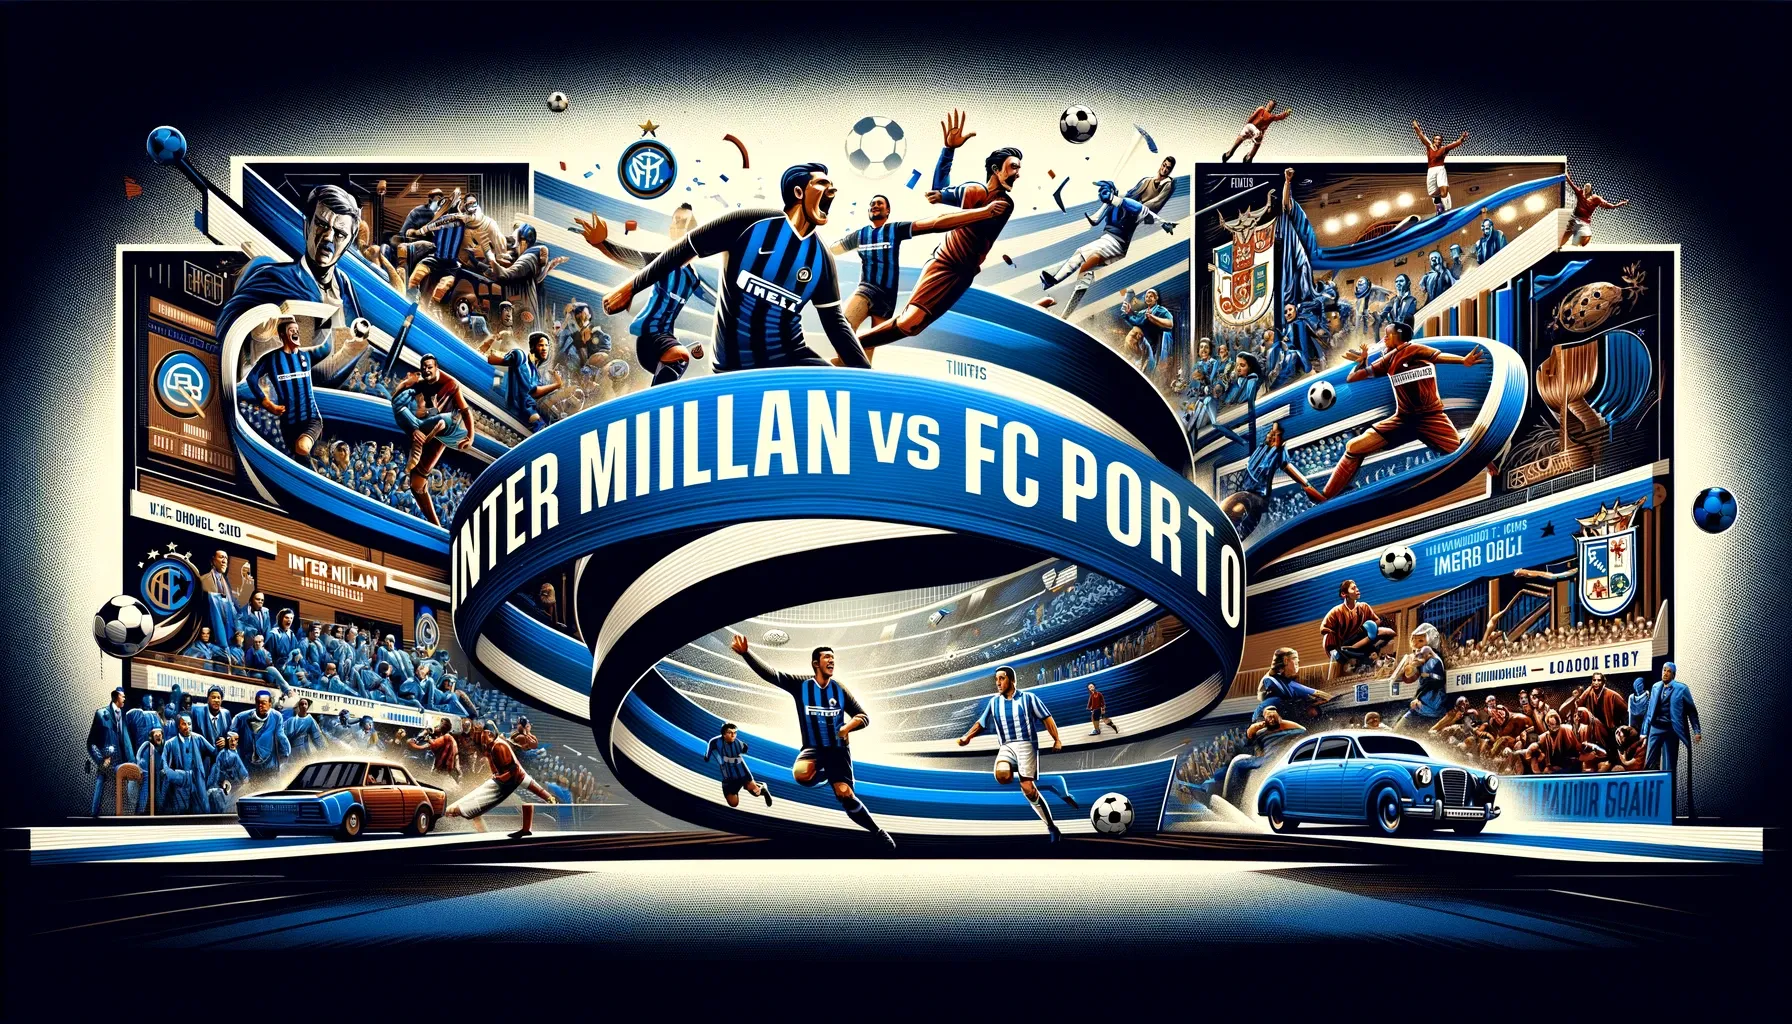 Inter Milan vs FC Porto Timeline: An Ultimate Guide